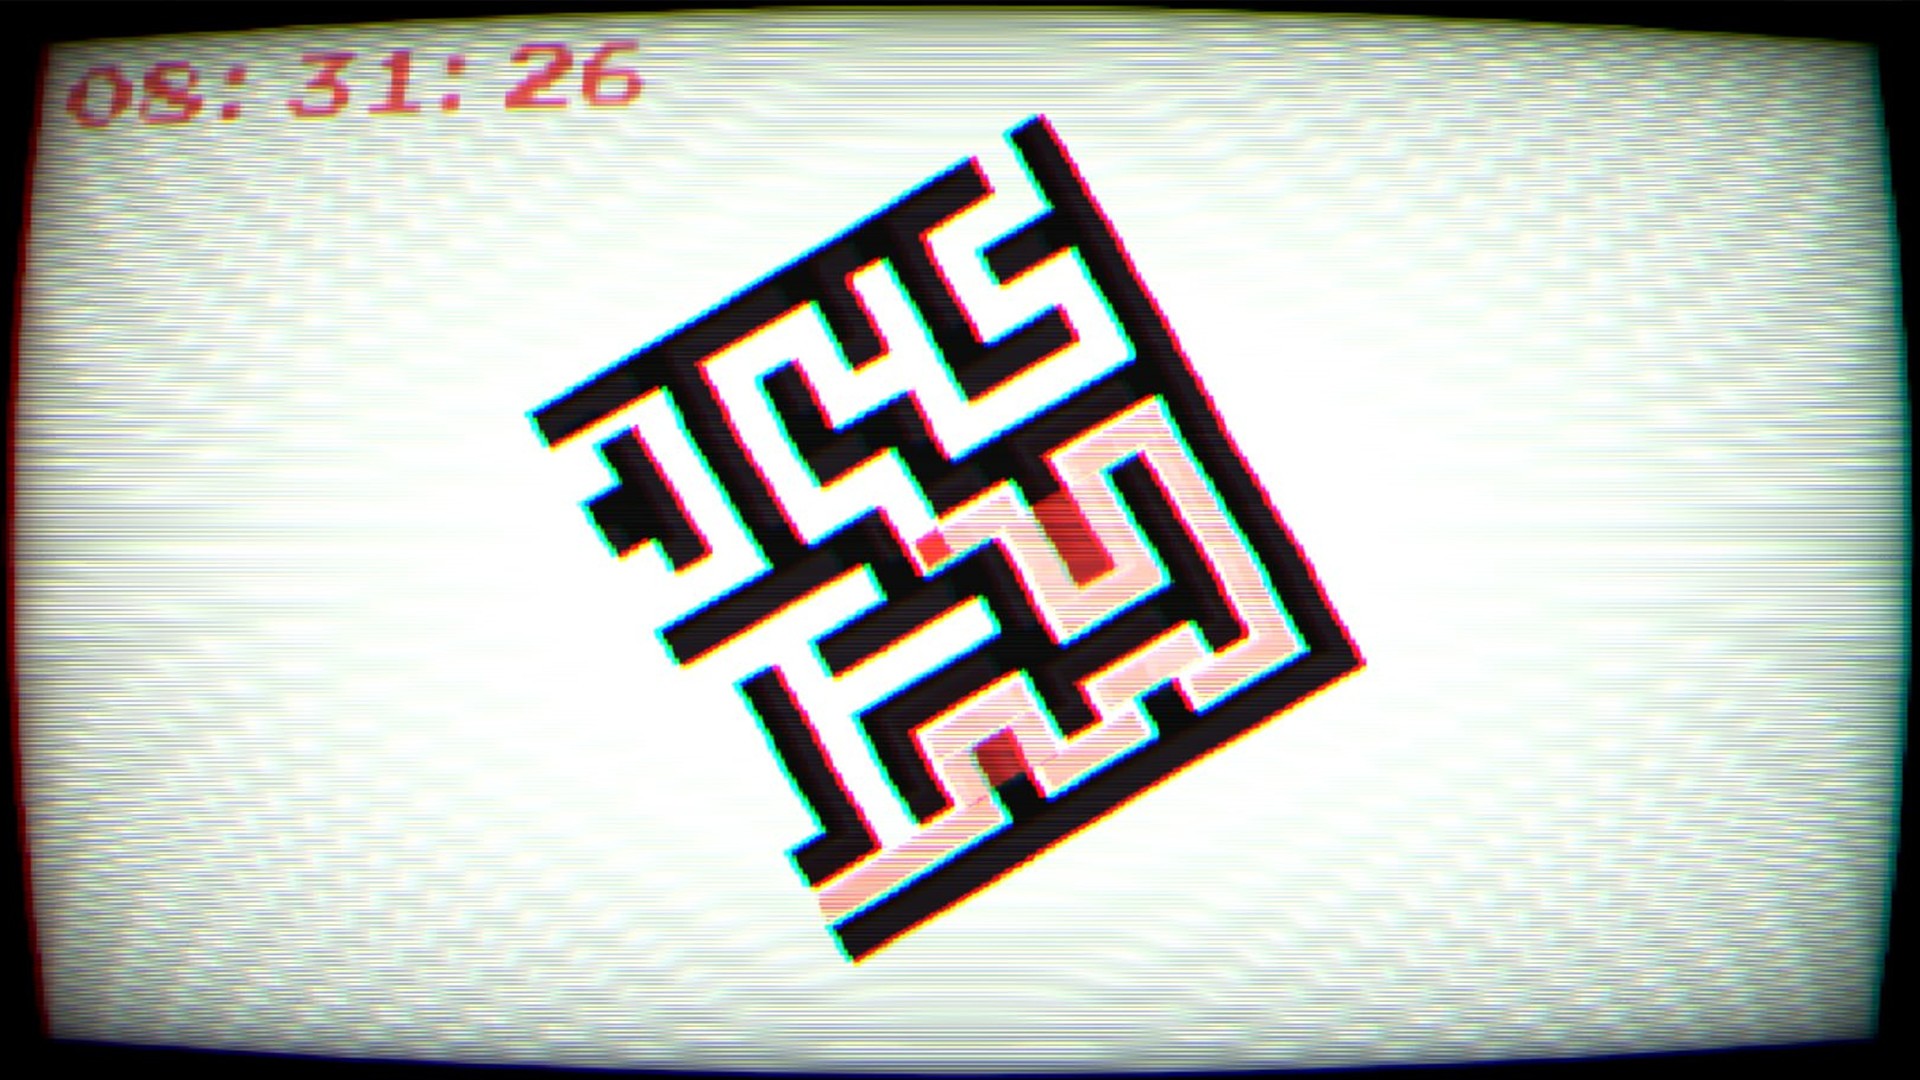 Deaths maze. Death Maze game 1980. A Maze of Death.